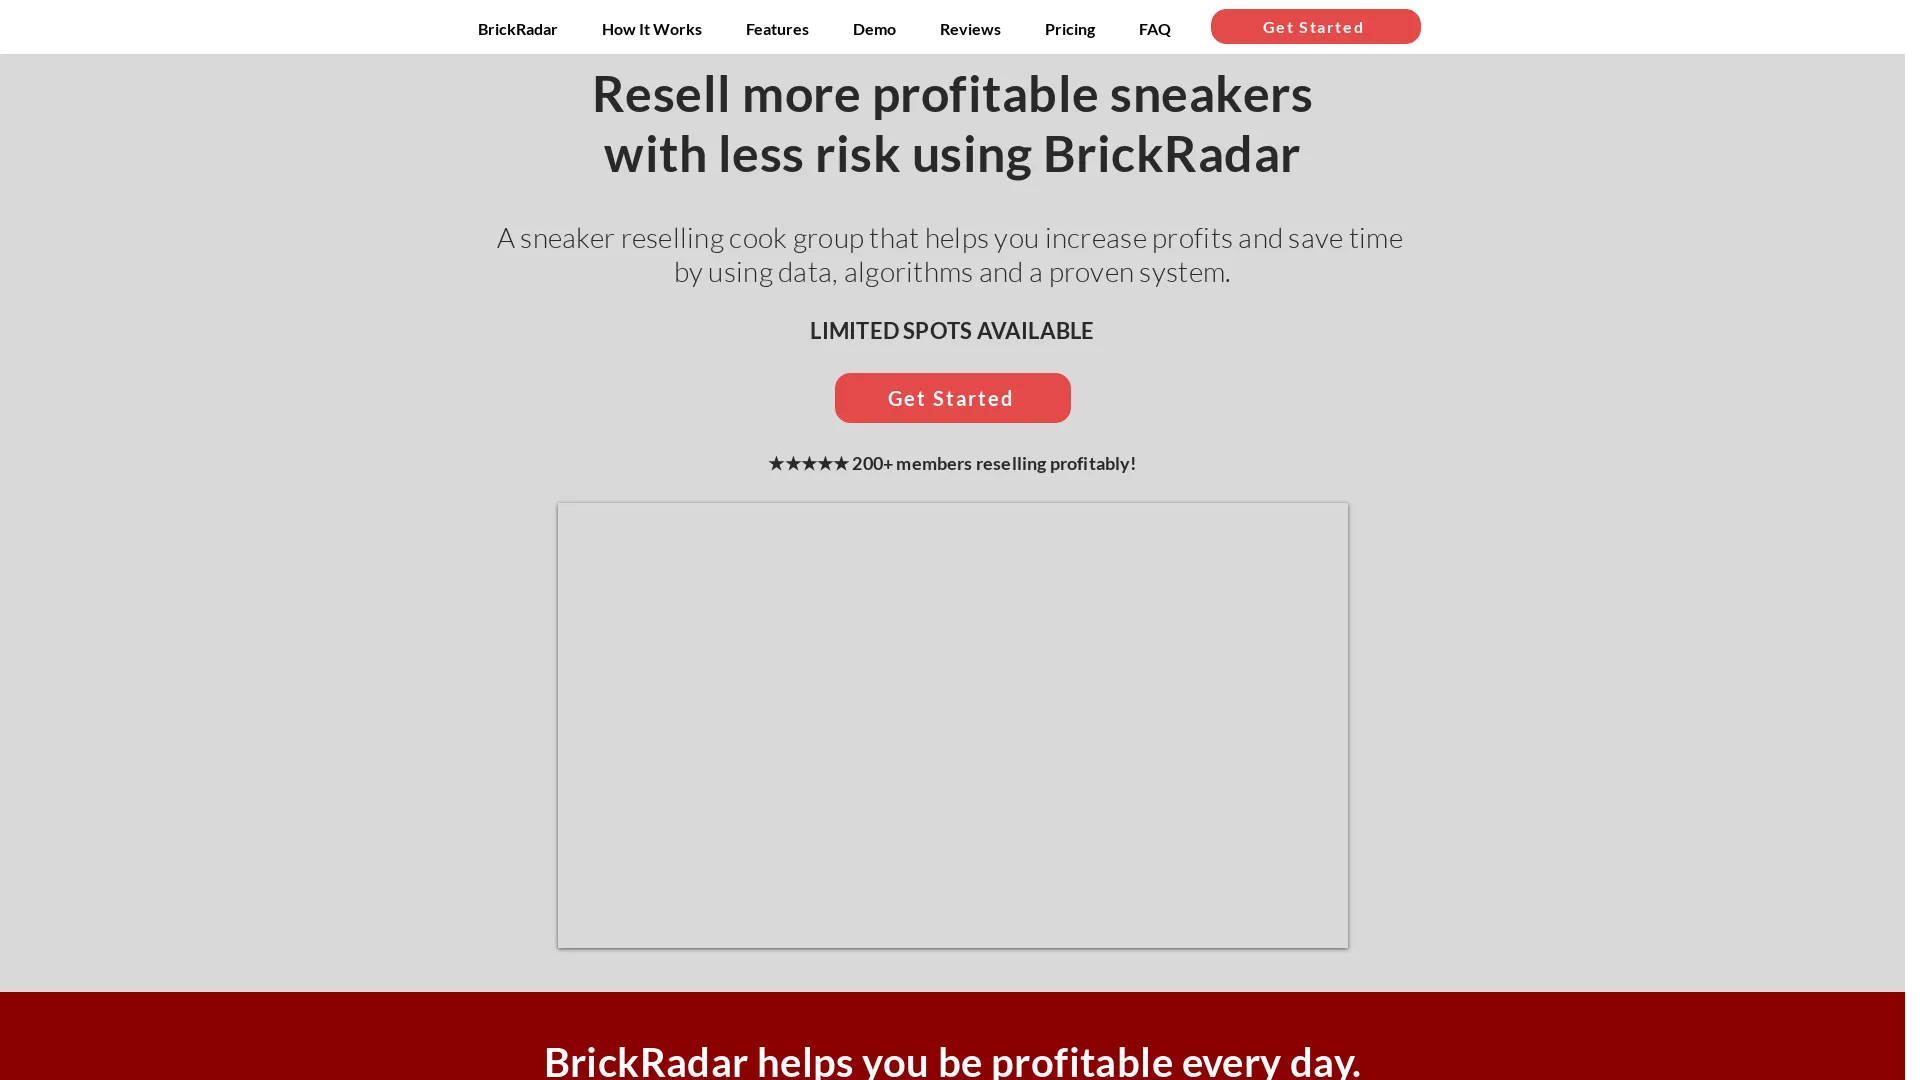 BrickRadar